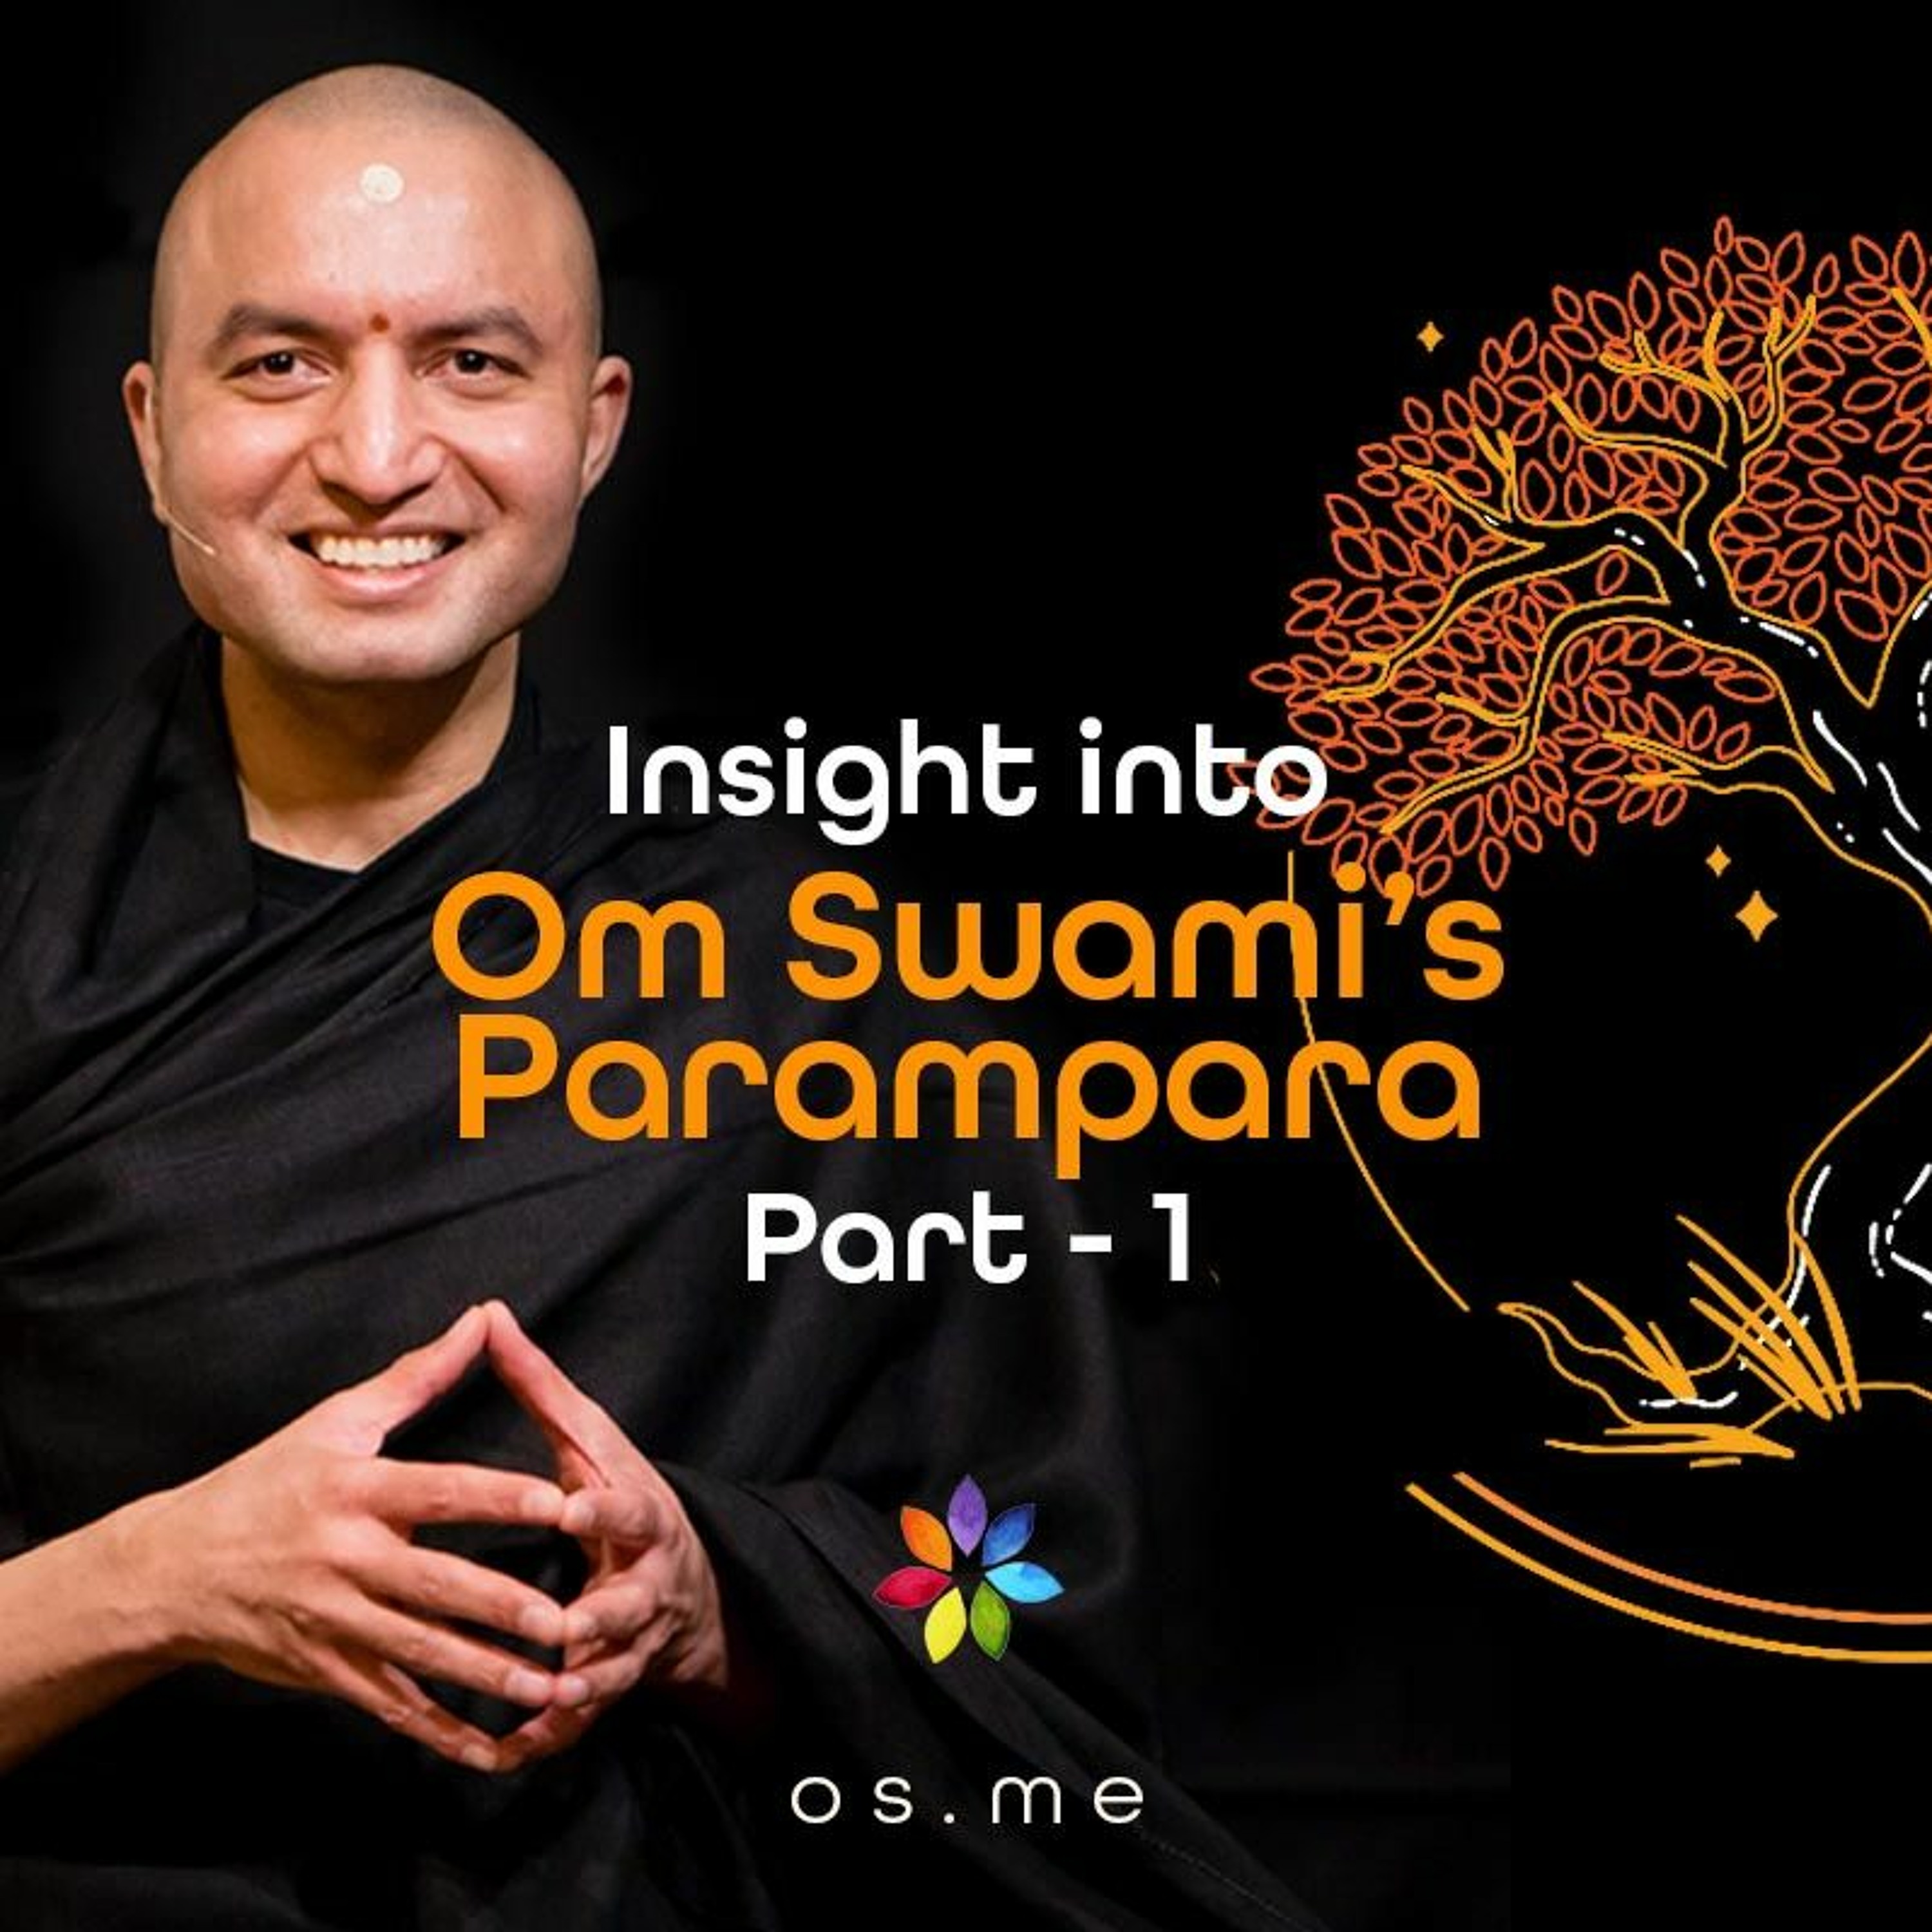 Om Swami's Parampara (Lineage) - Part 1 [Hindi]